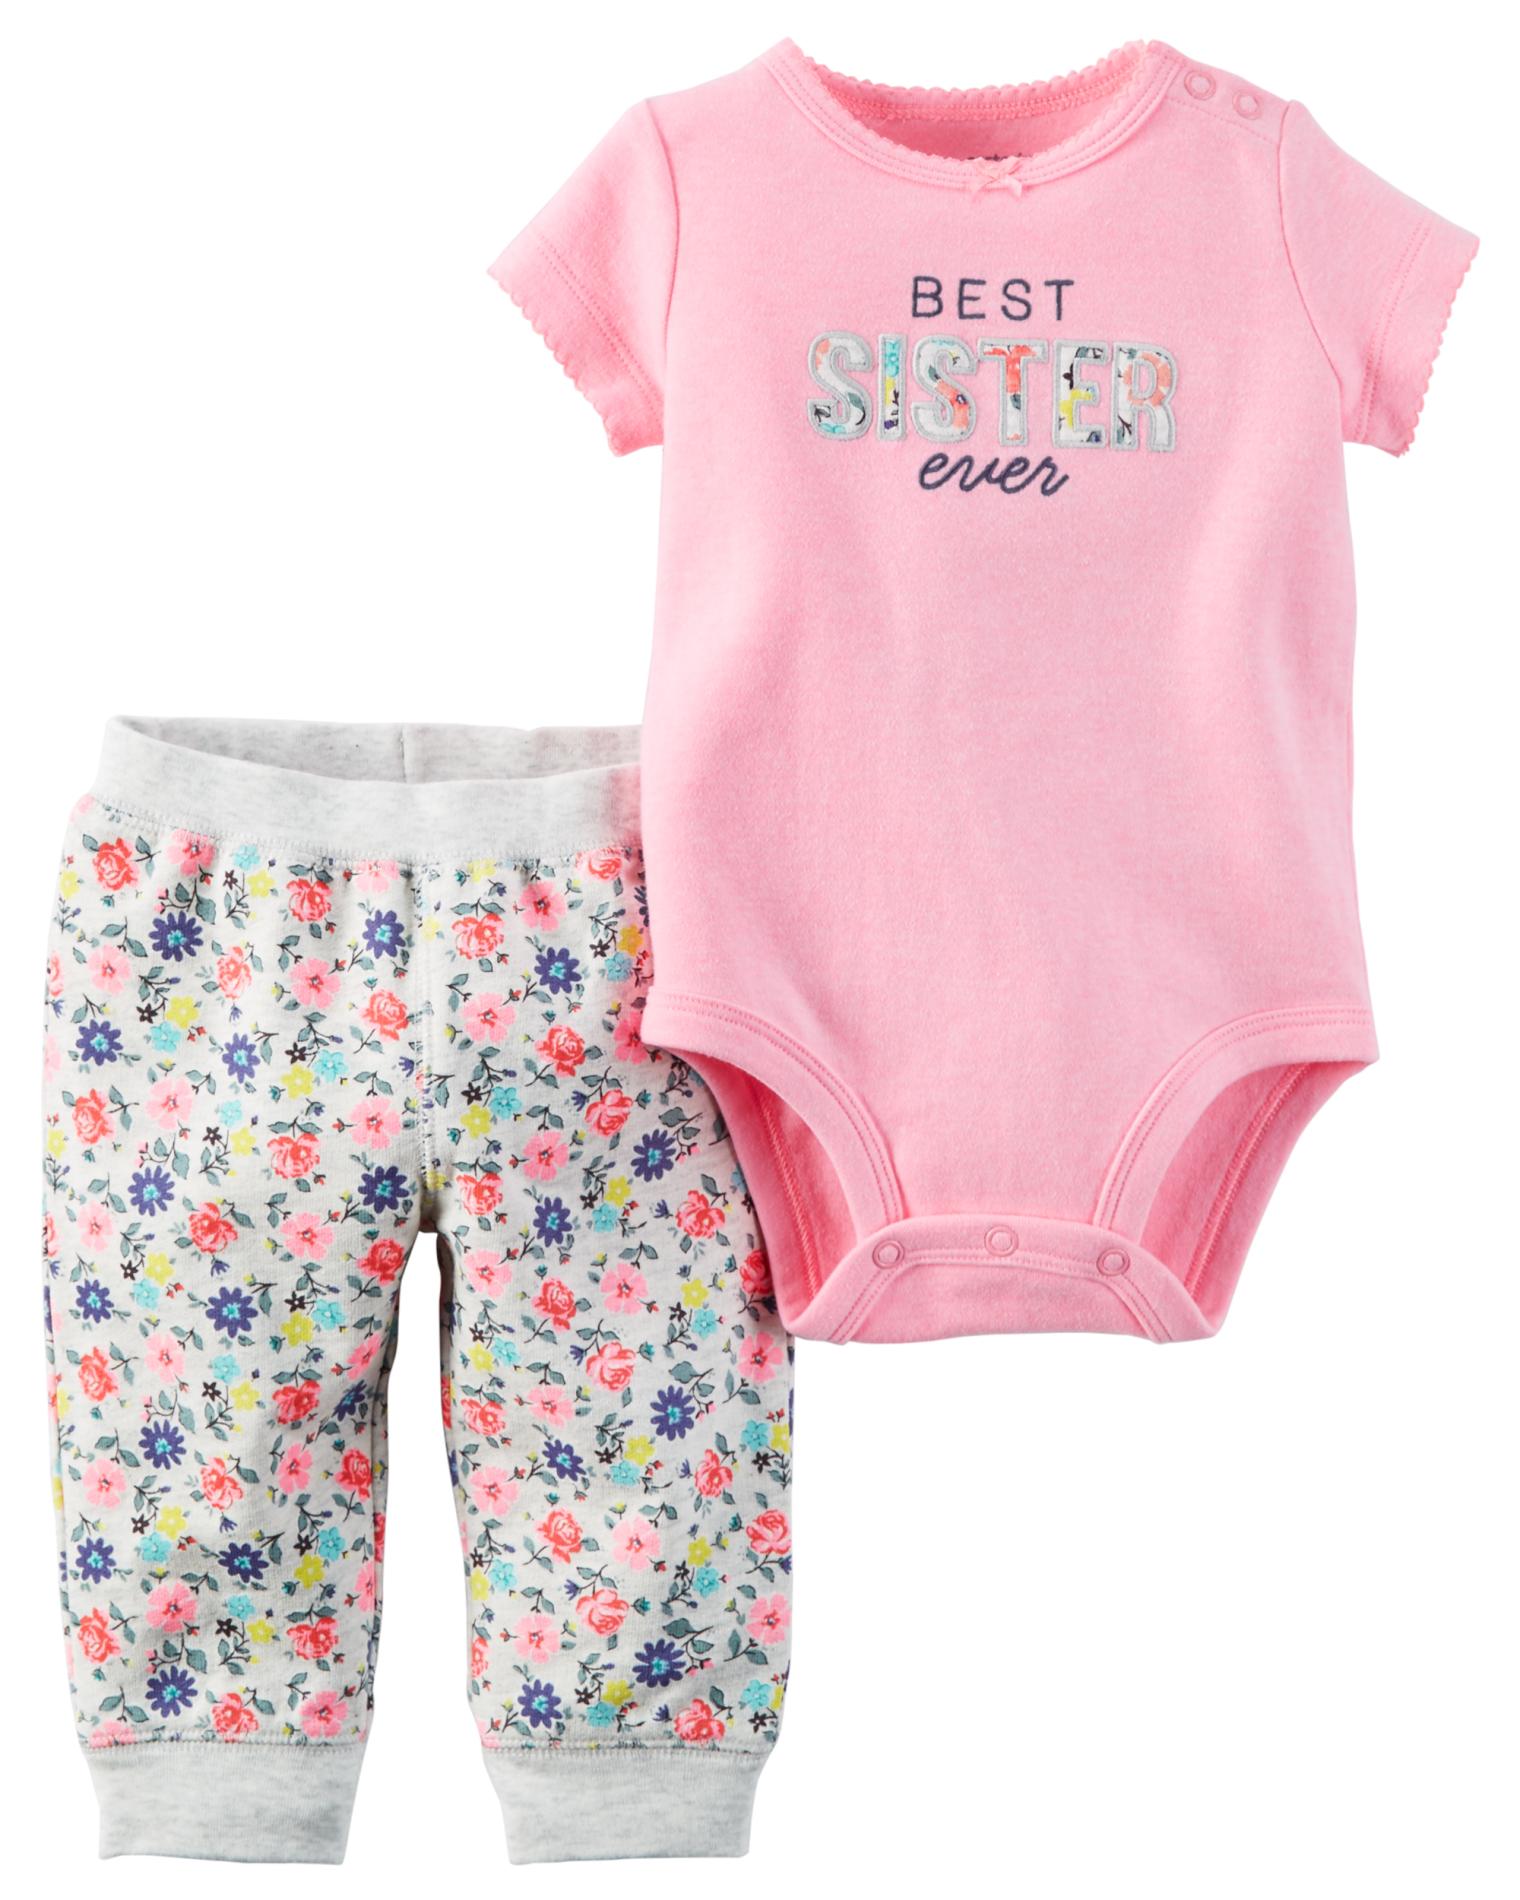 Carter's Newborn & Infant Girls' Short-Sleeve Bodysuit & Sweatpants - Best Sister